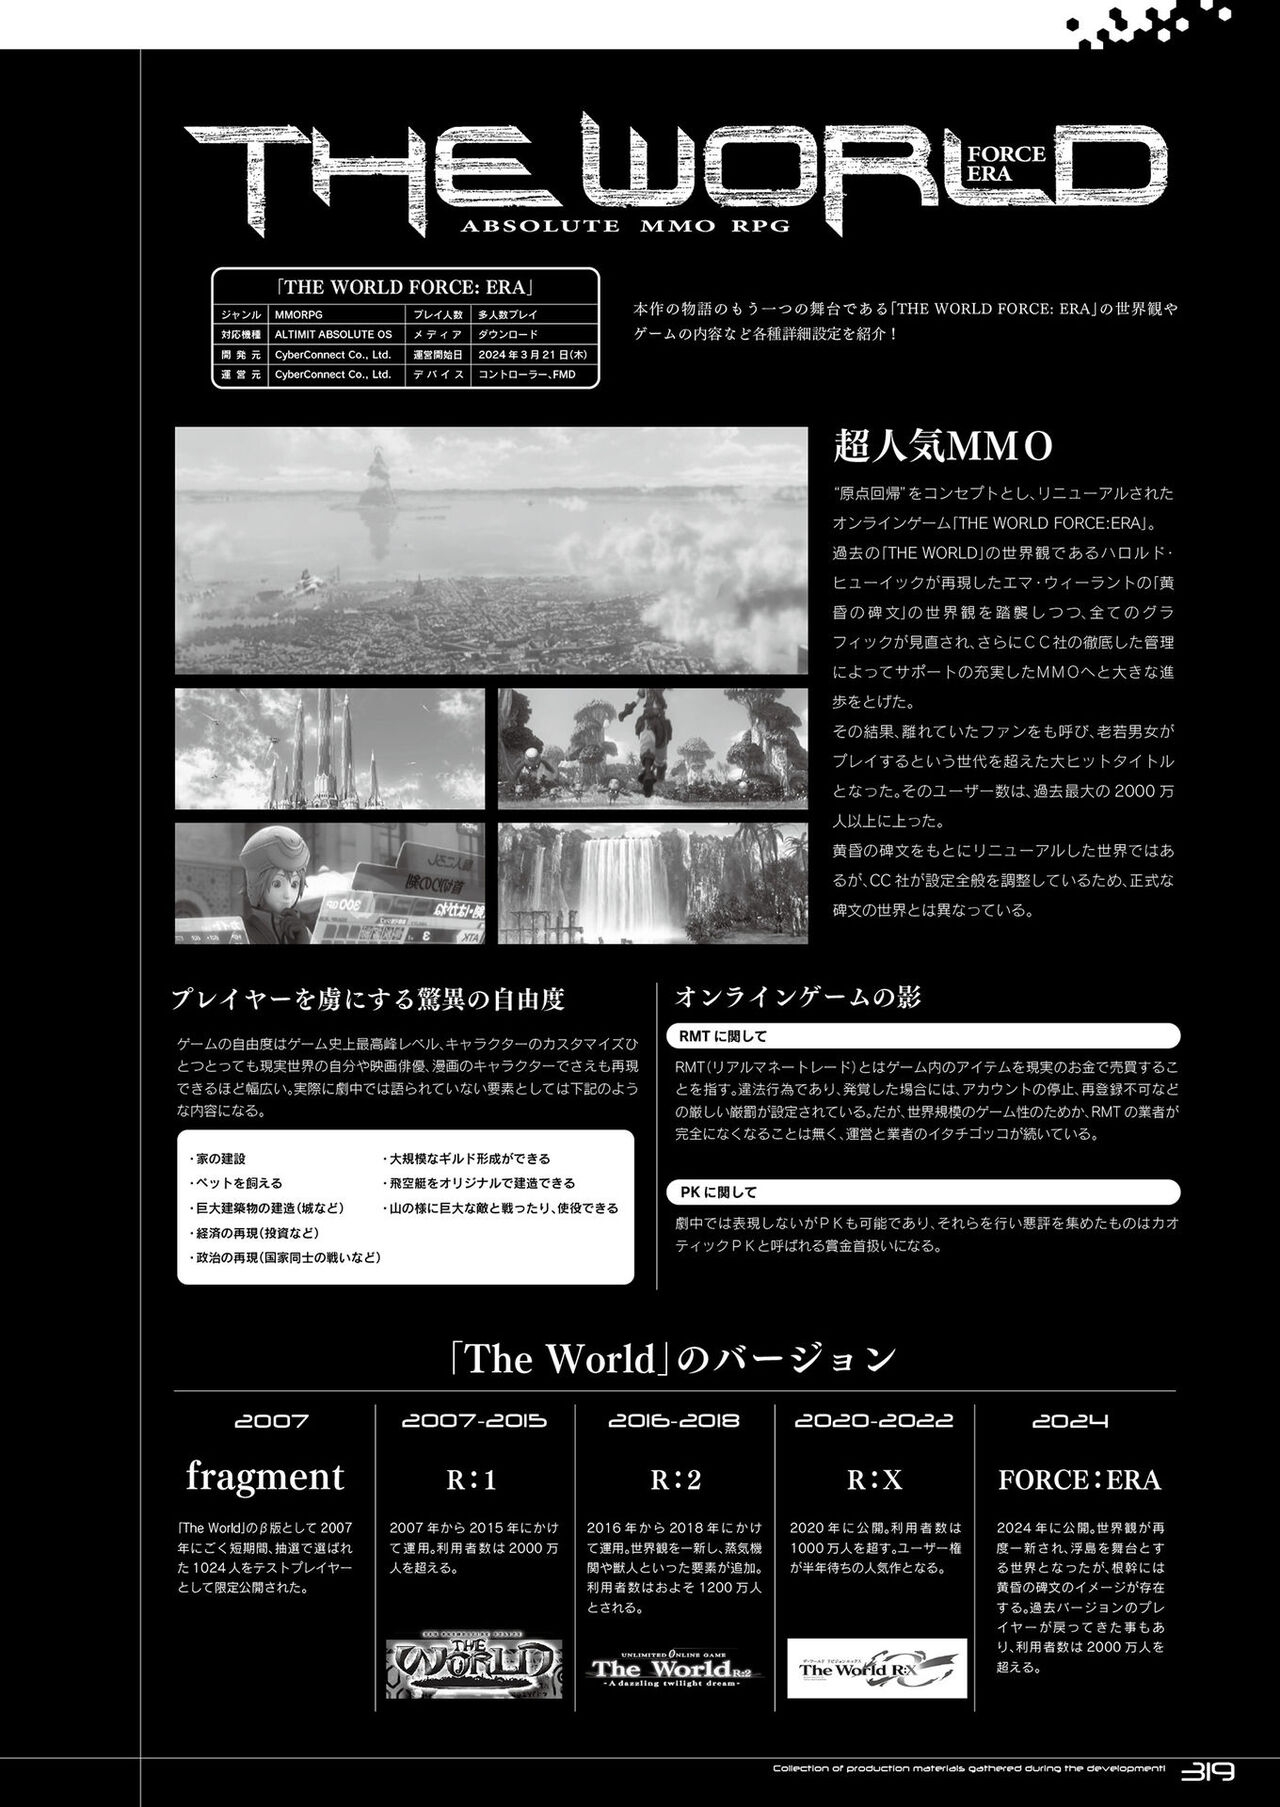 Dot Hack Sekai-no Muko ni  +Versus Complete Set  Documentation .hack //Archives _ 05 321